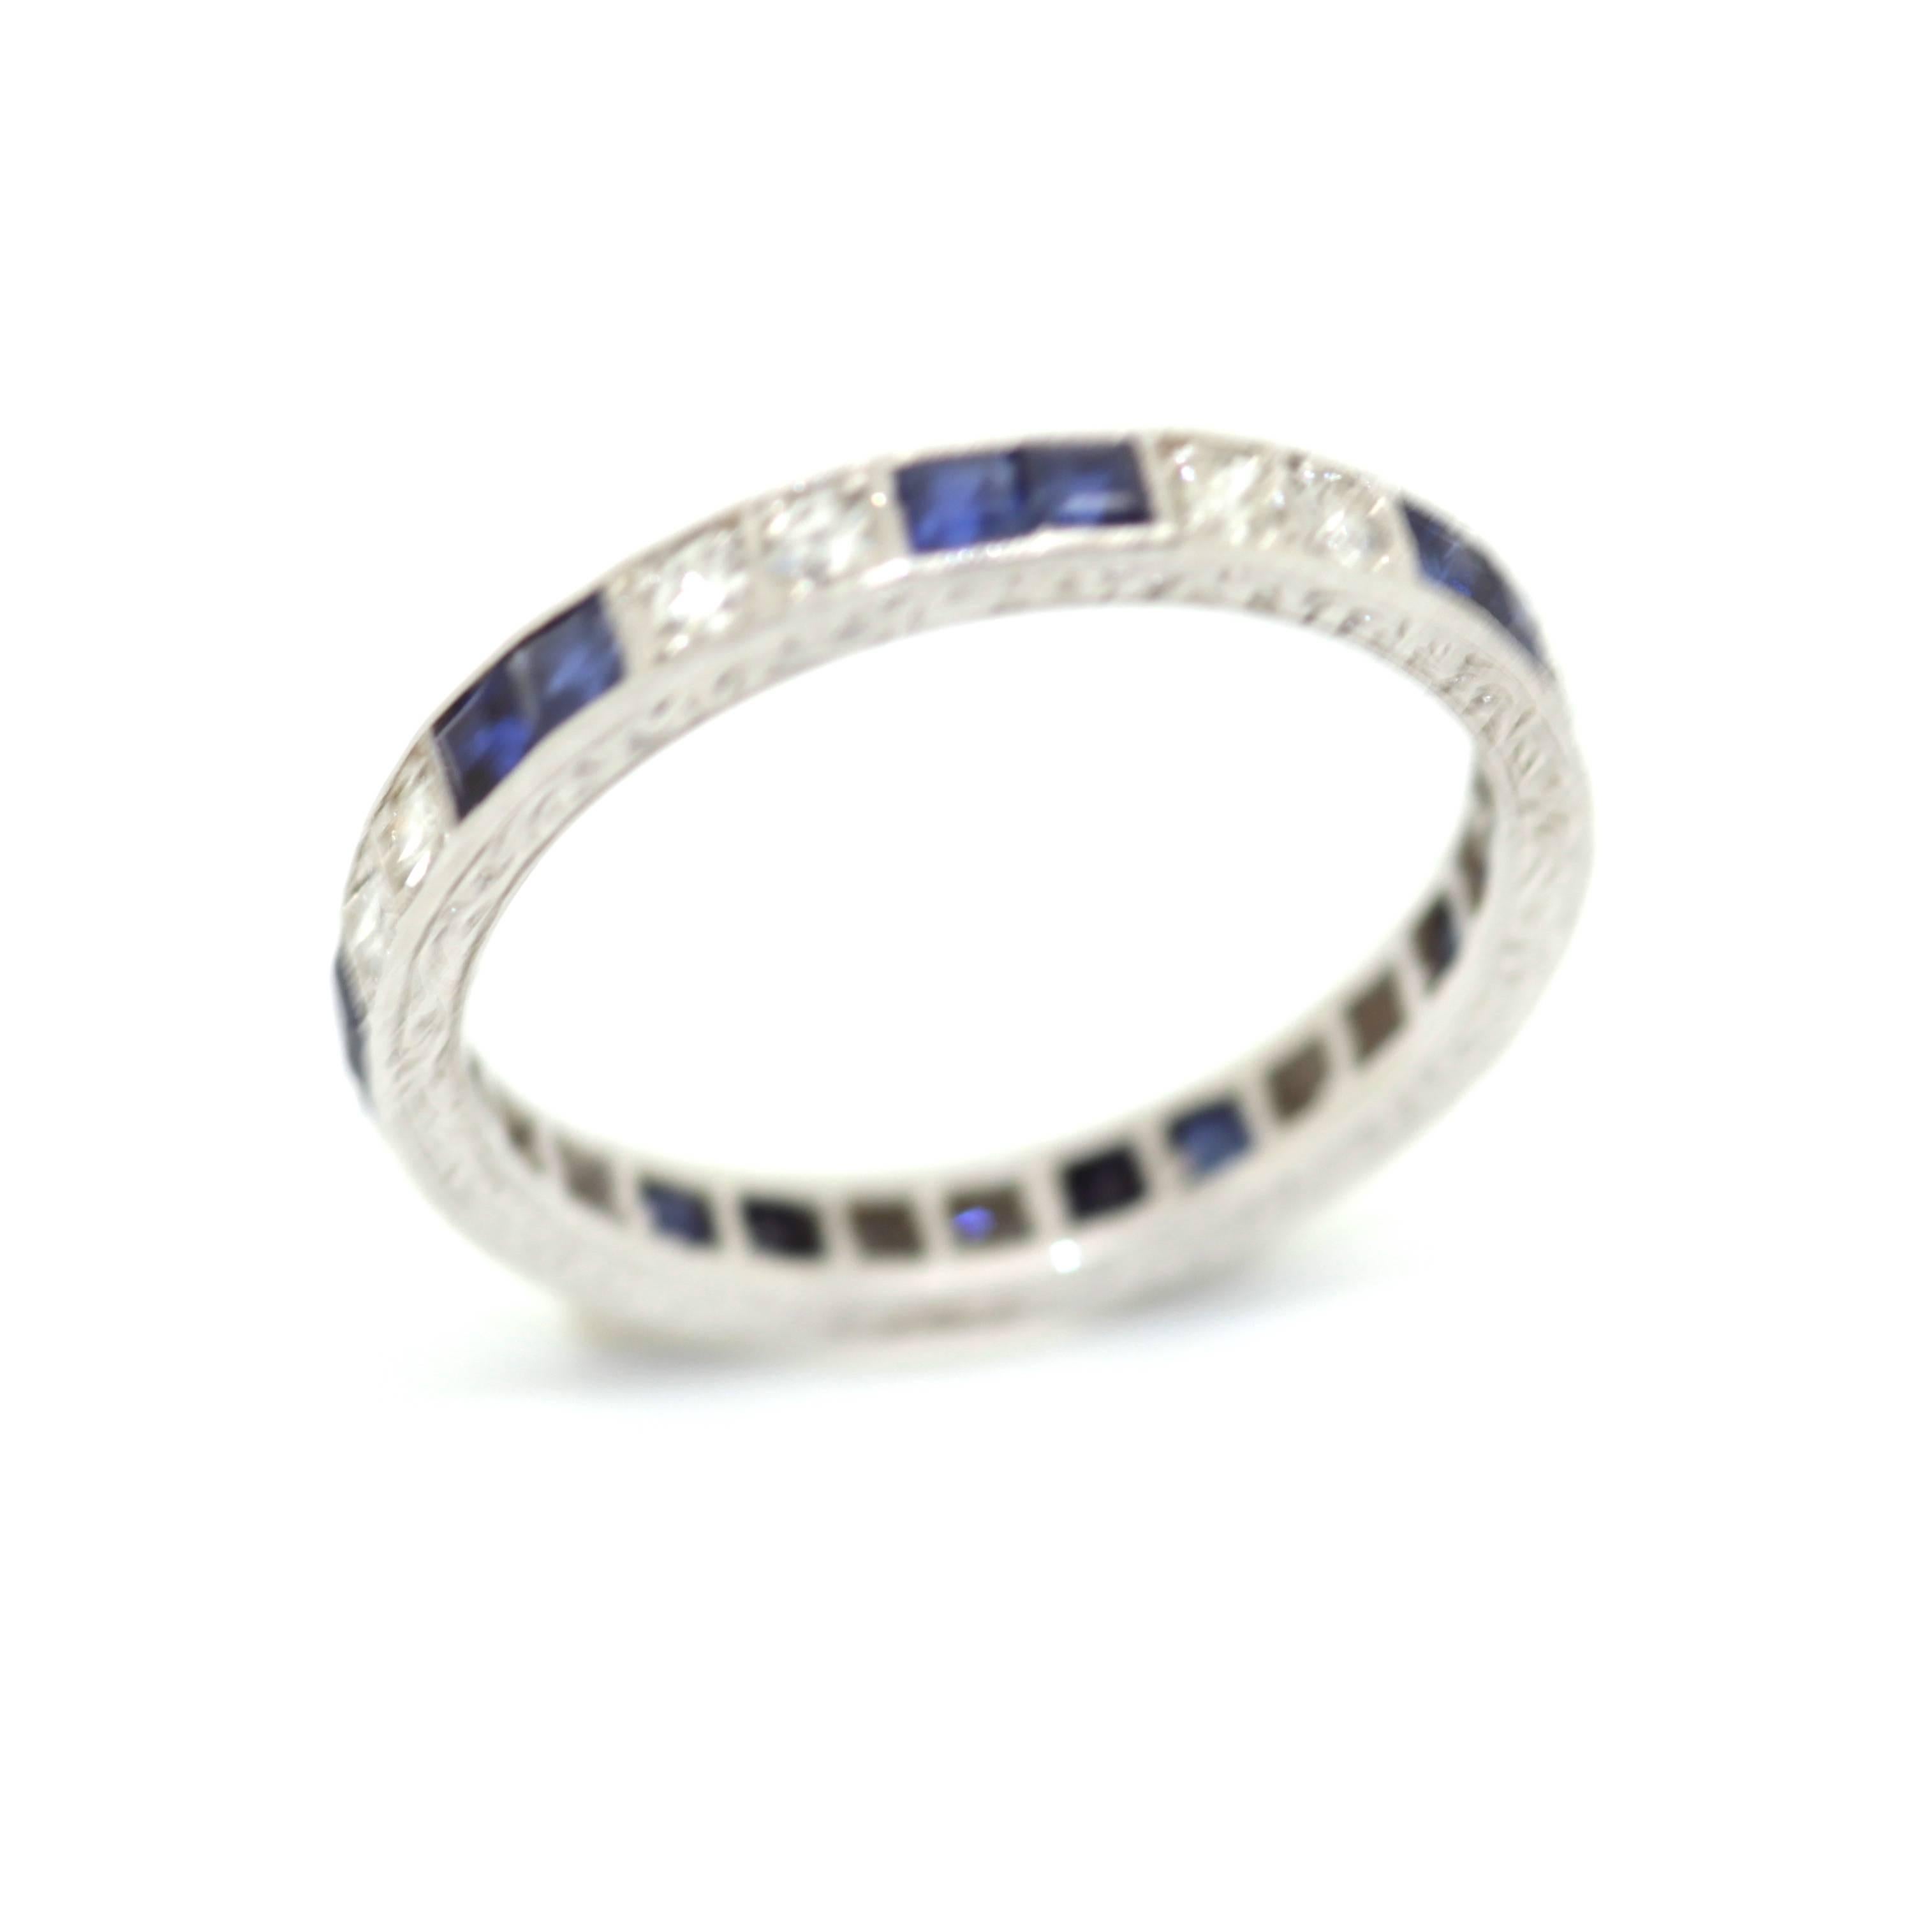 Sapphire diamond eternity ring set in platinum, circa: 1920.